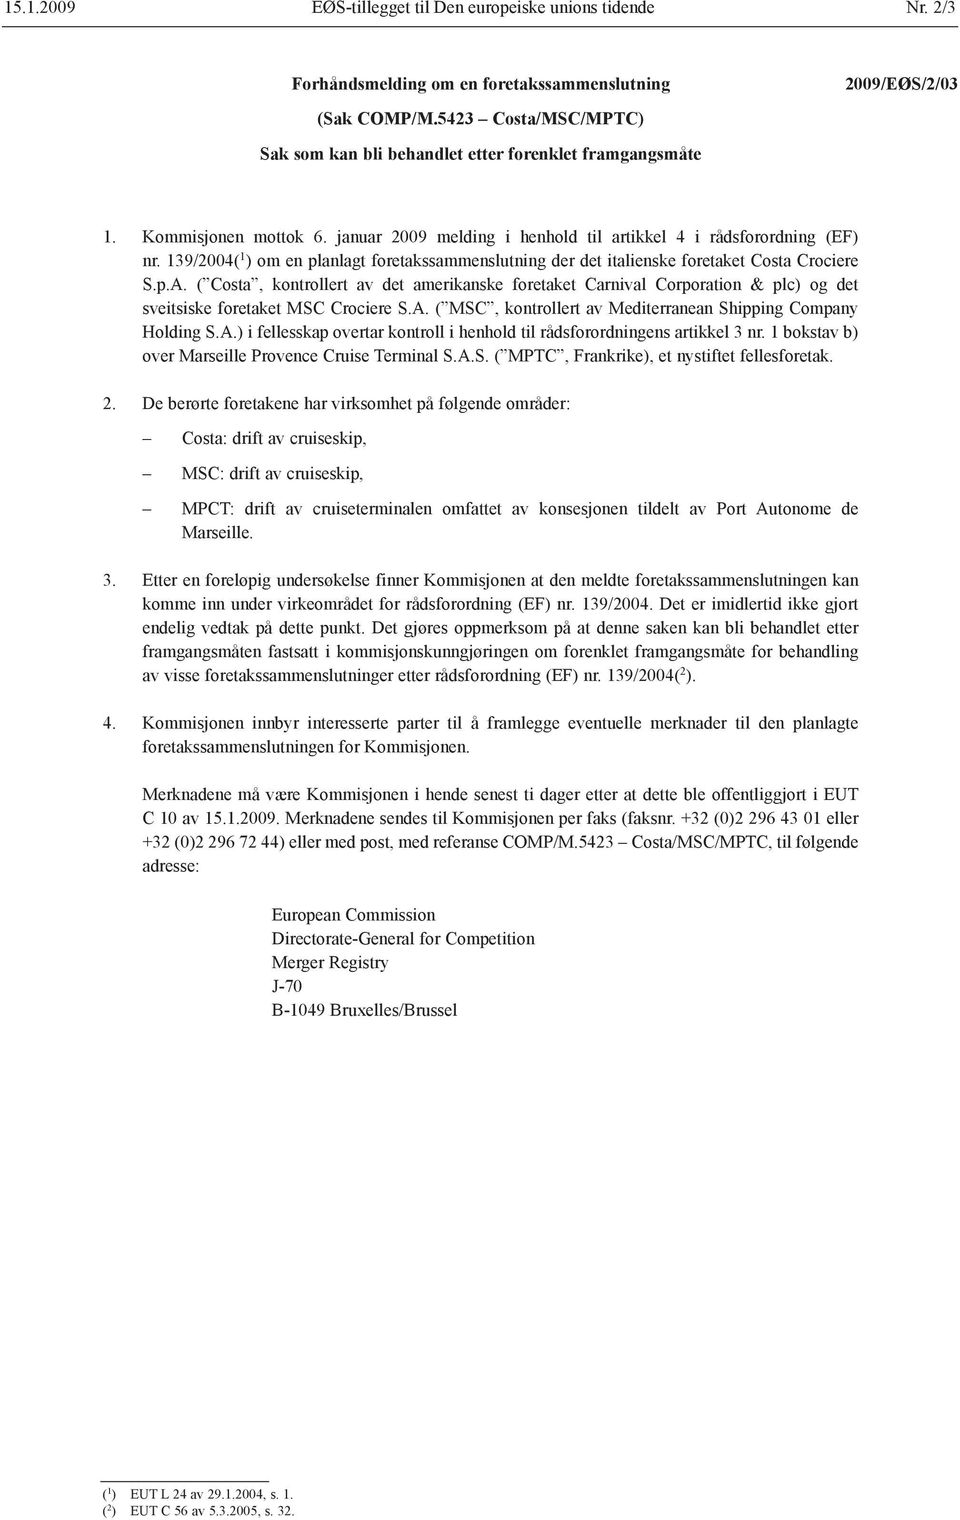 139/2004( 1 ) om en planlagt foretakssammenslutning der det italienske foretaket Costa Crociere S.p.A.